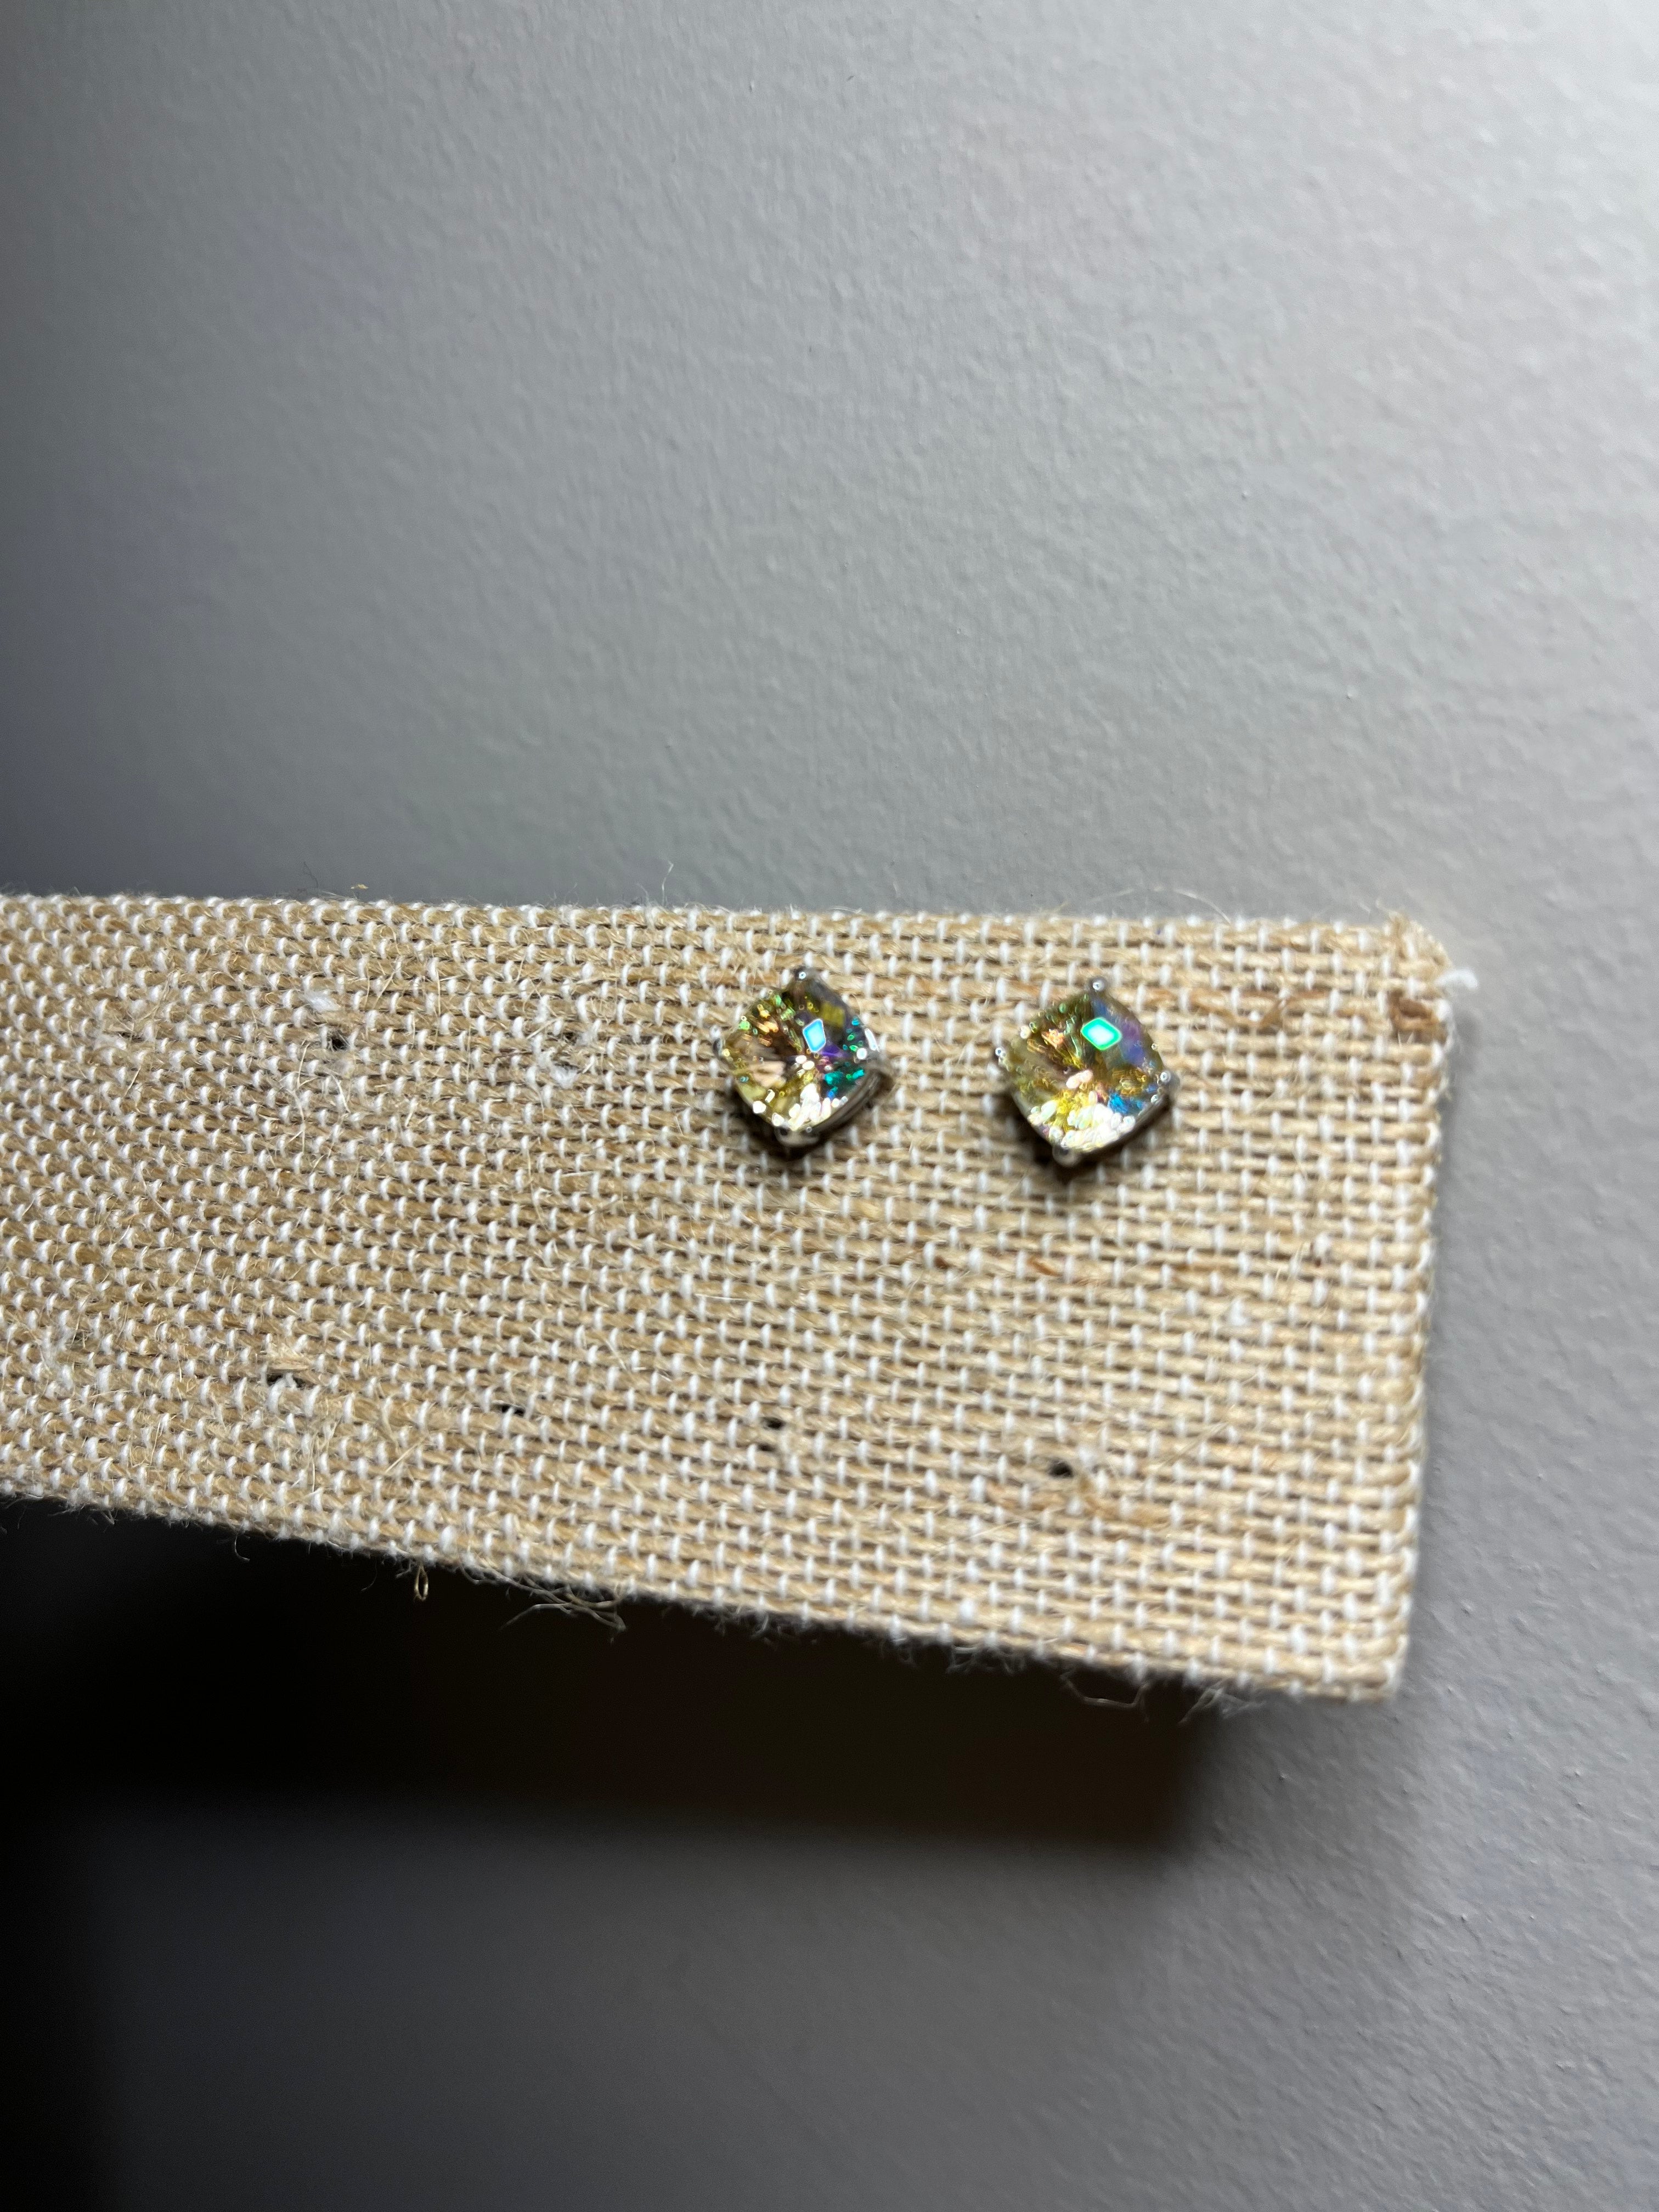 Origami Owl Fall Locket Earrings 2018 GOLD TRIANGLE LIVING LOCKET DROP  EARRINGS New! $48.00 | Locket earrings, Origami owl earrings, Steampunk  necklace